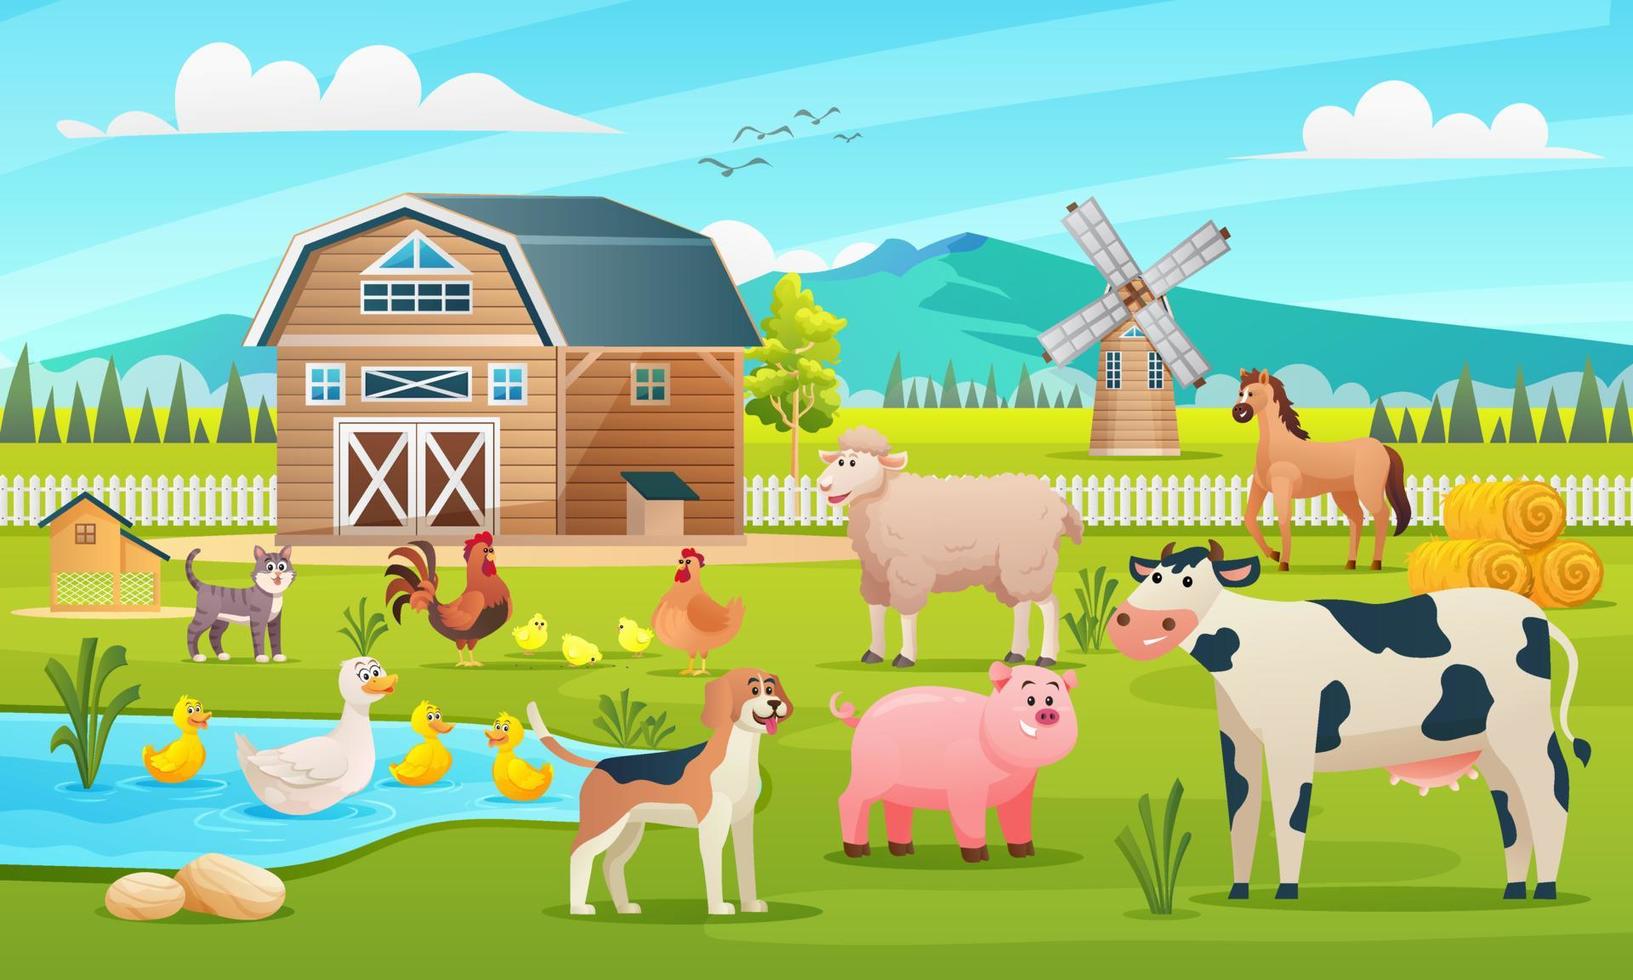 husdjur som i jordbruket bakgrunden tecknad illustration vektor